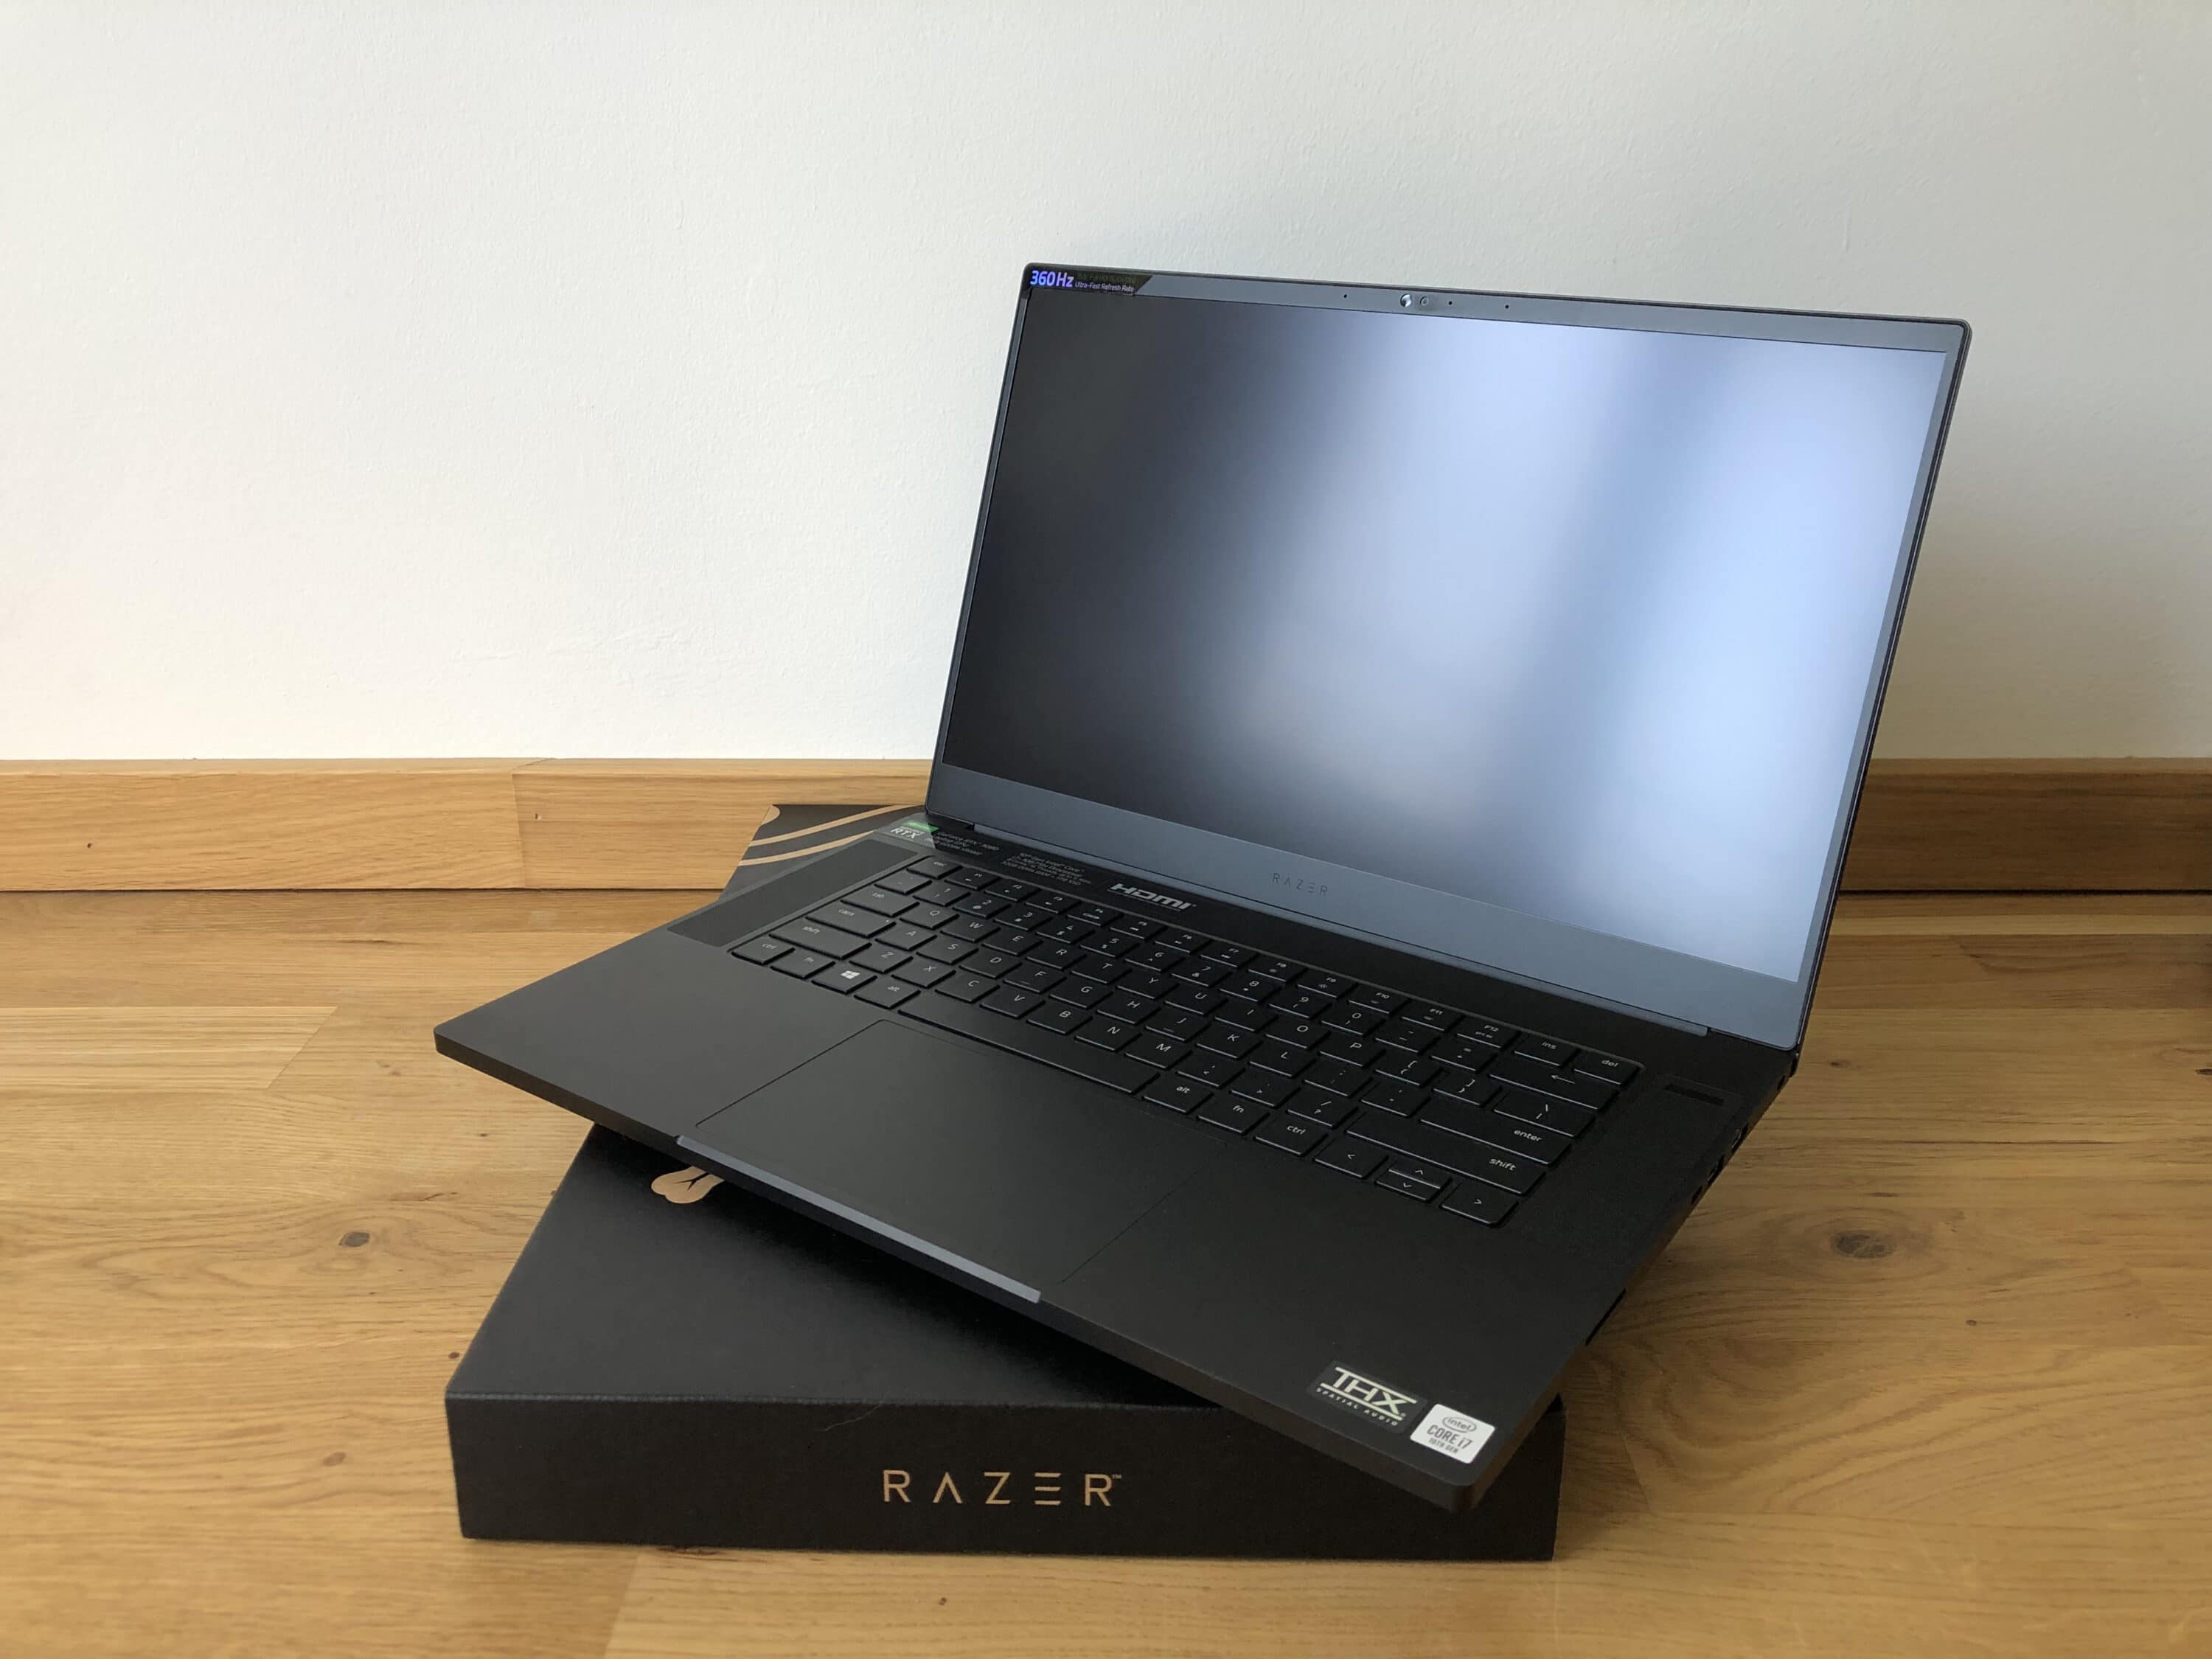 Razer Blade 15 Review: One Sharp Gaming Laptop